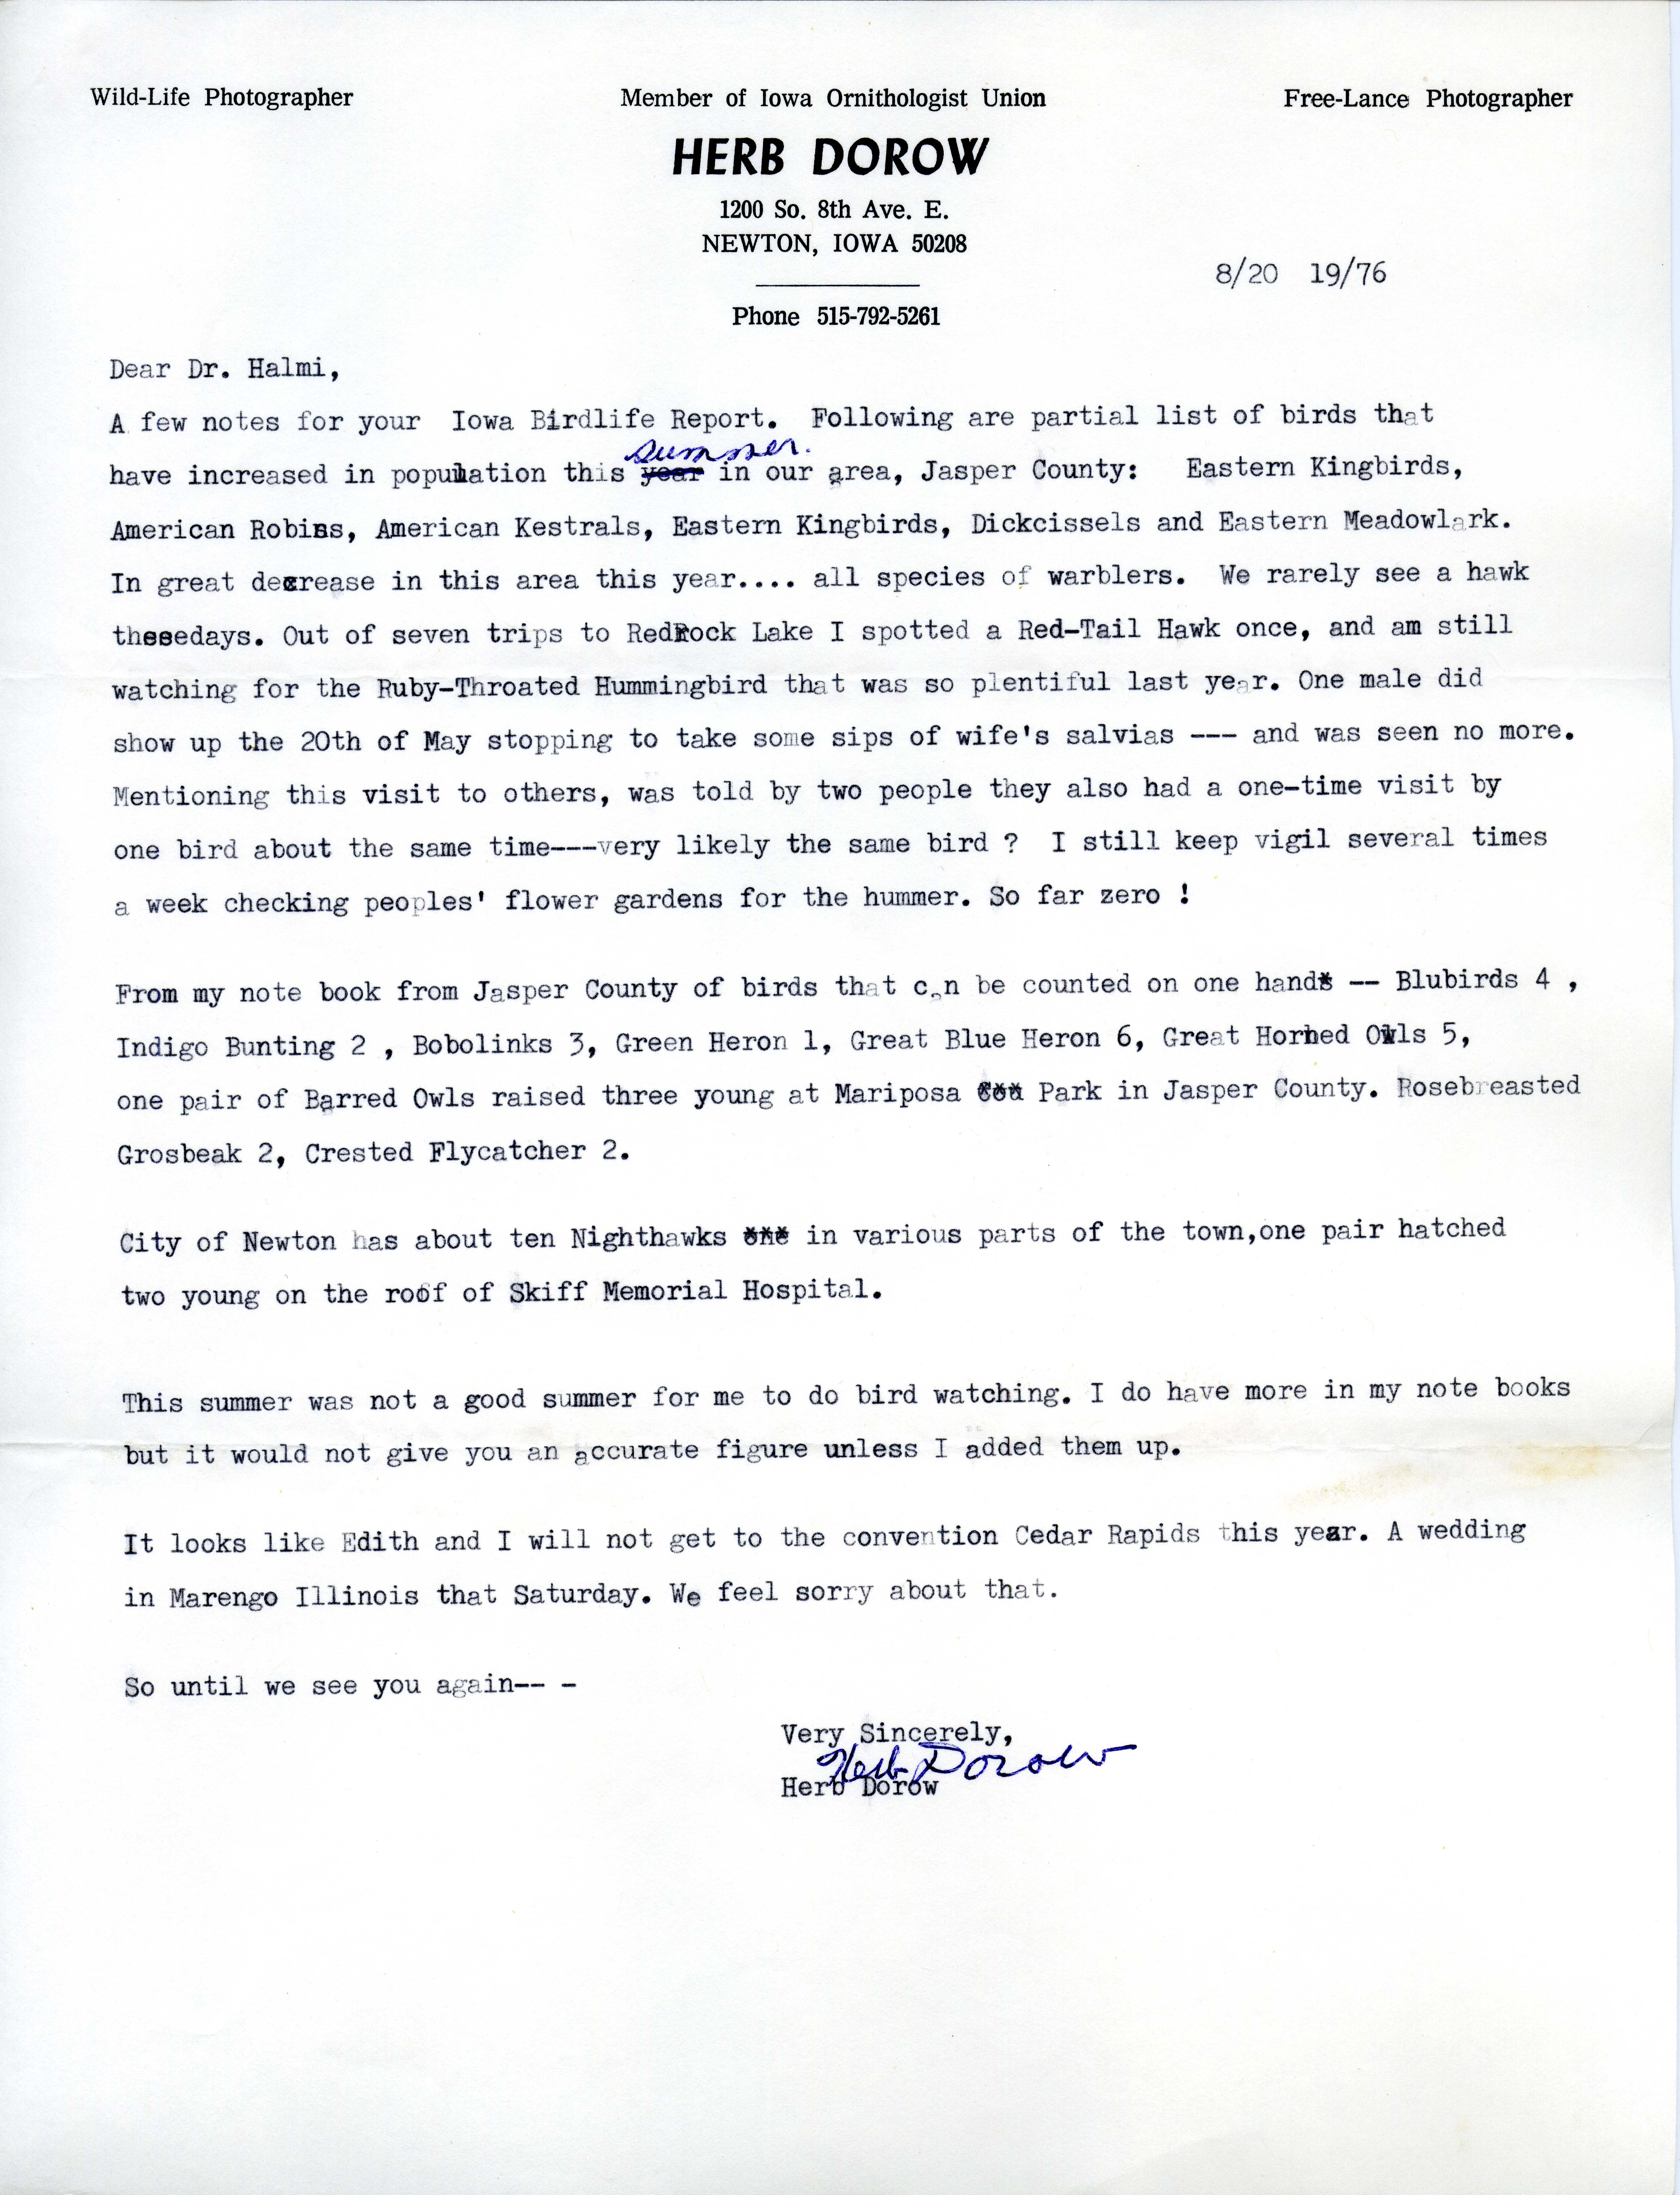 Letter from Herb Dorow to Nicholas G. Halmi Regarding Bird Sightings in Jasper County, August 20, 1976